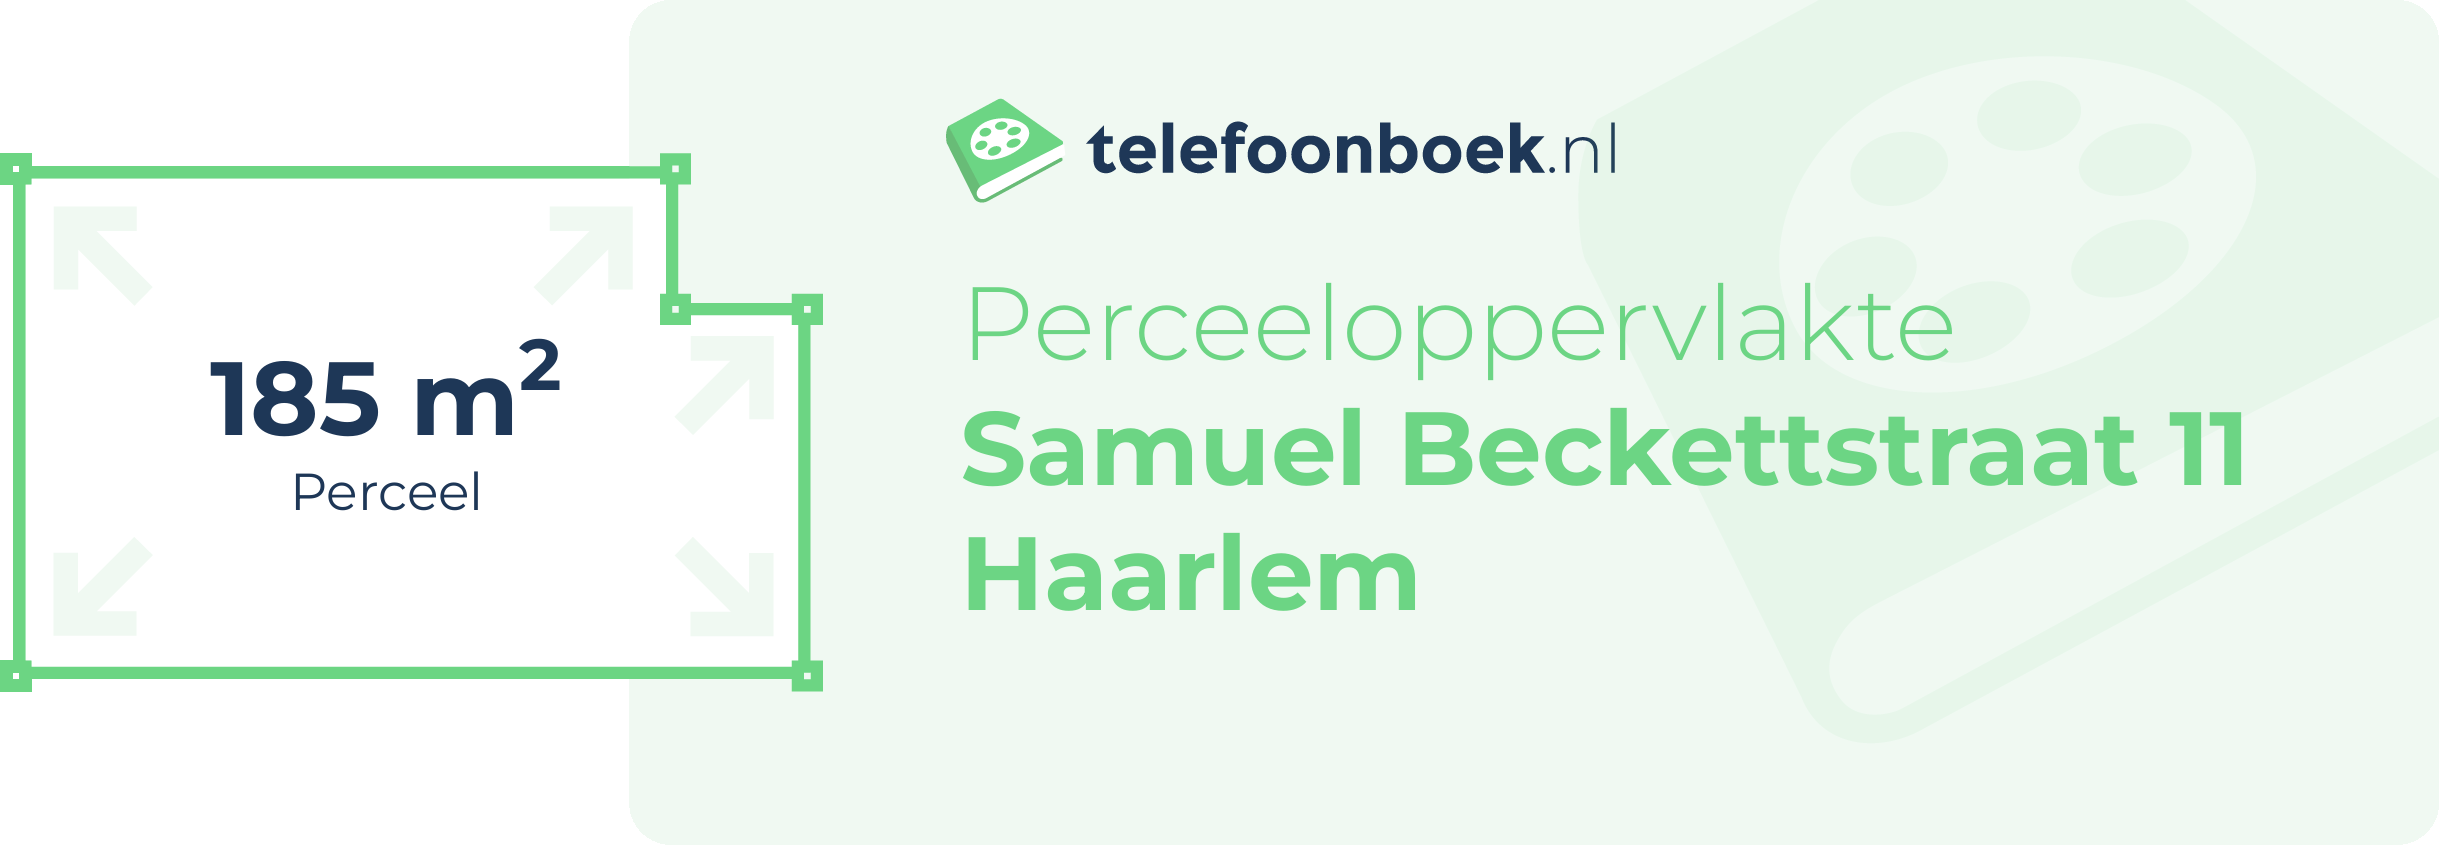 Perceeloppervlakte Samuel Beckettstraat 11 Haarlem